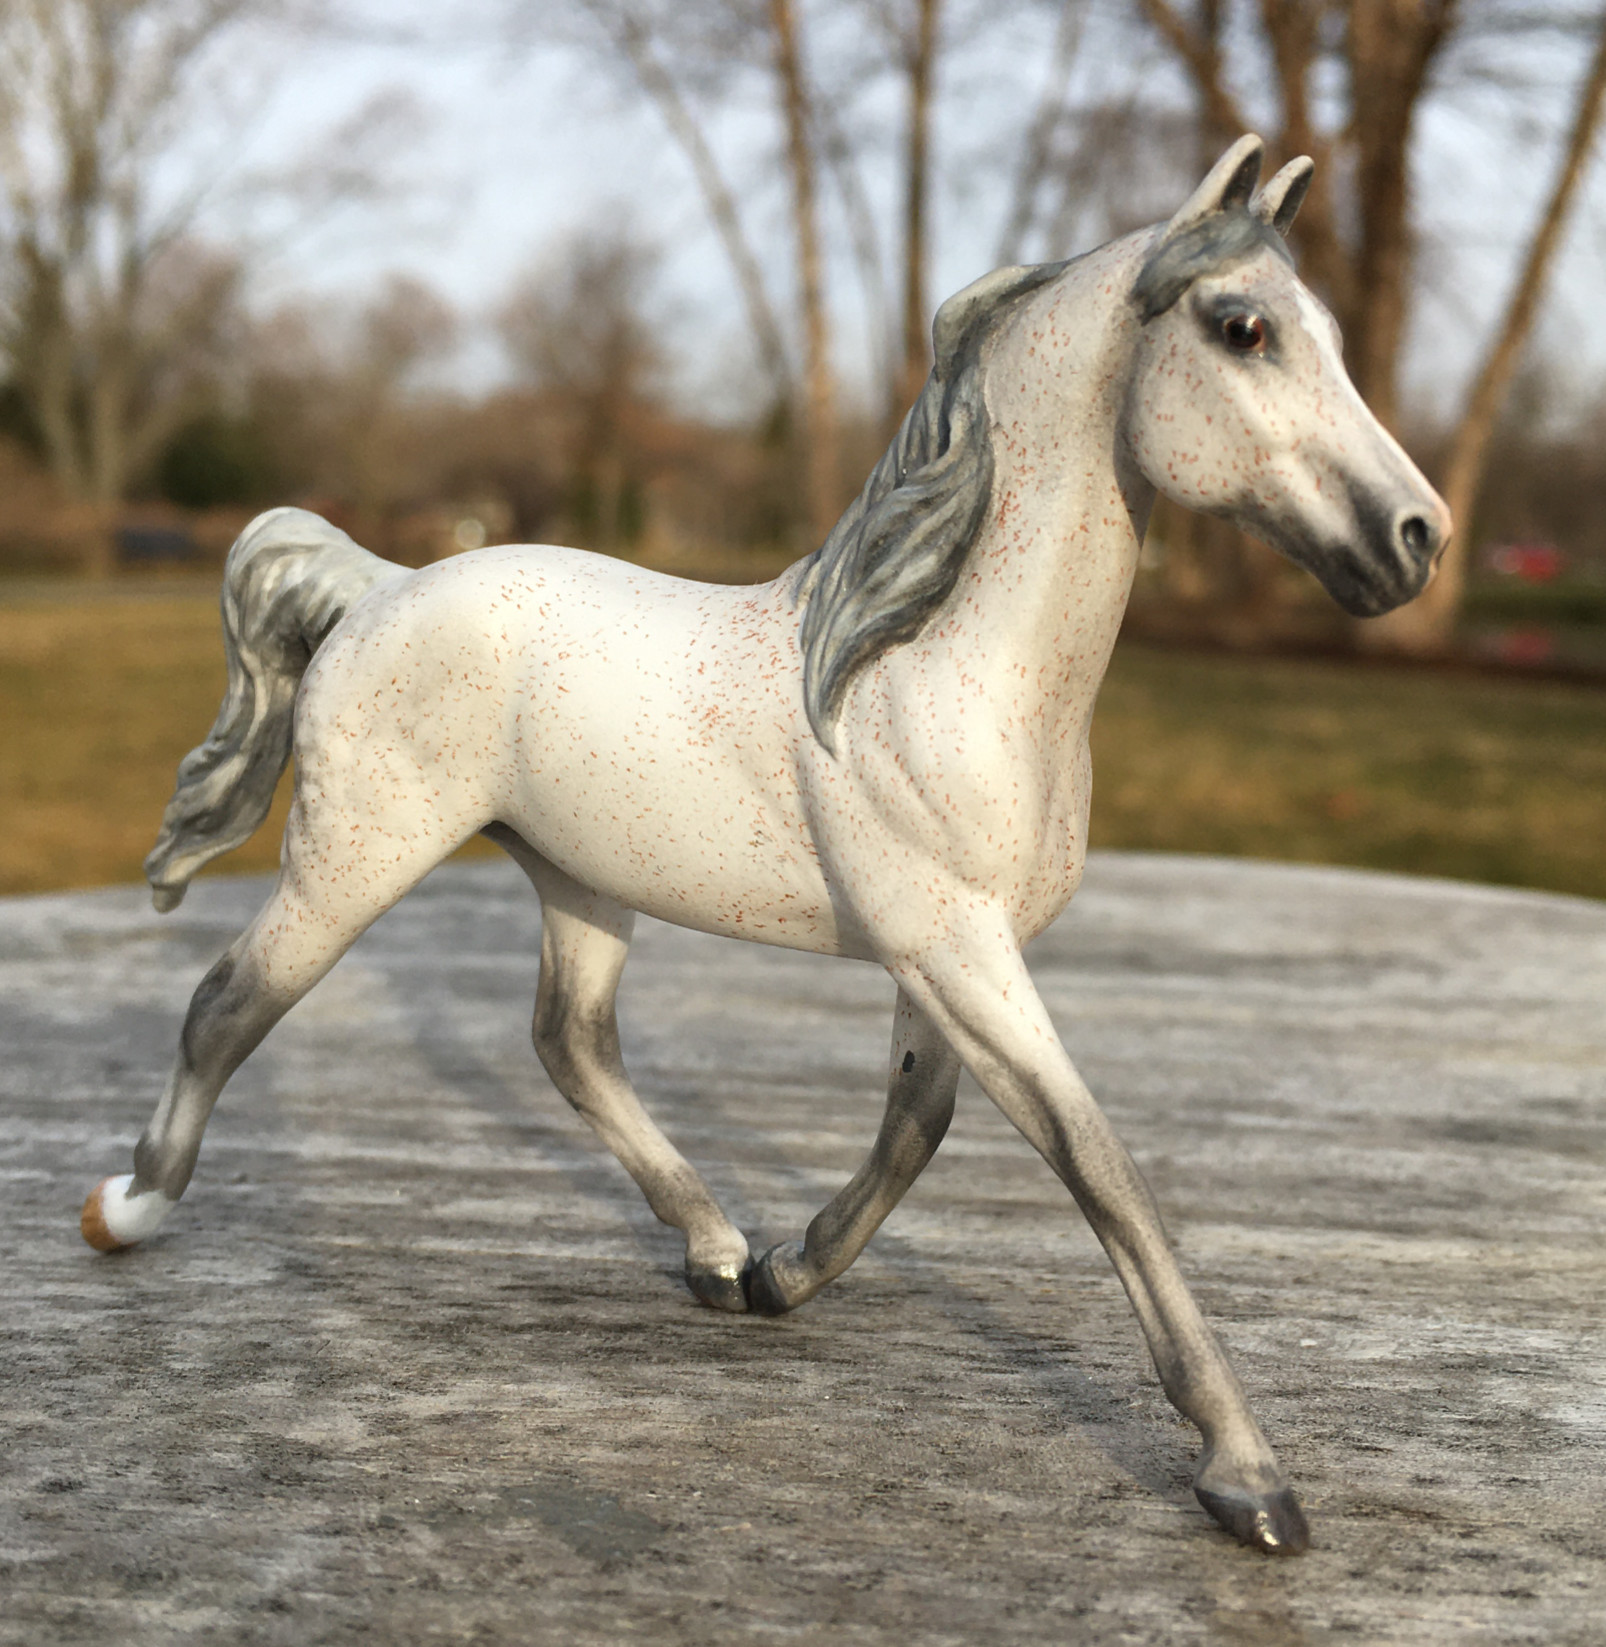 CM Breyer Prince Charming Stablemate Custom, a dapple flea bitten gray grey part Arabian mare by Sarah Tregay, a Custom Mini/ Stablemate Model Horse 